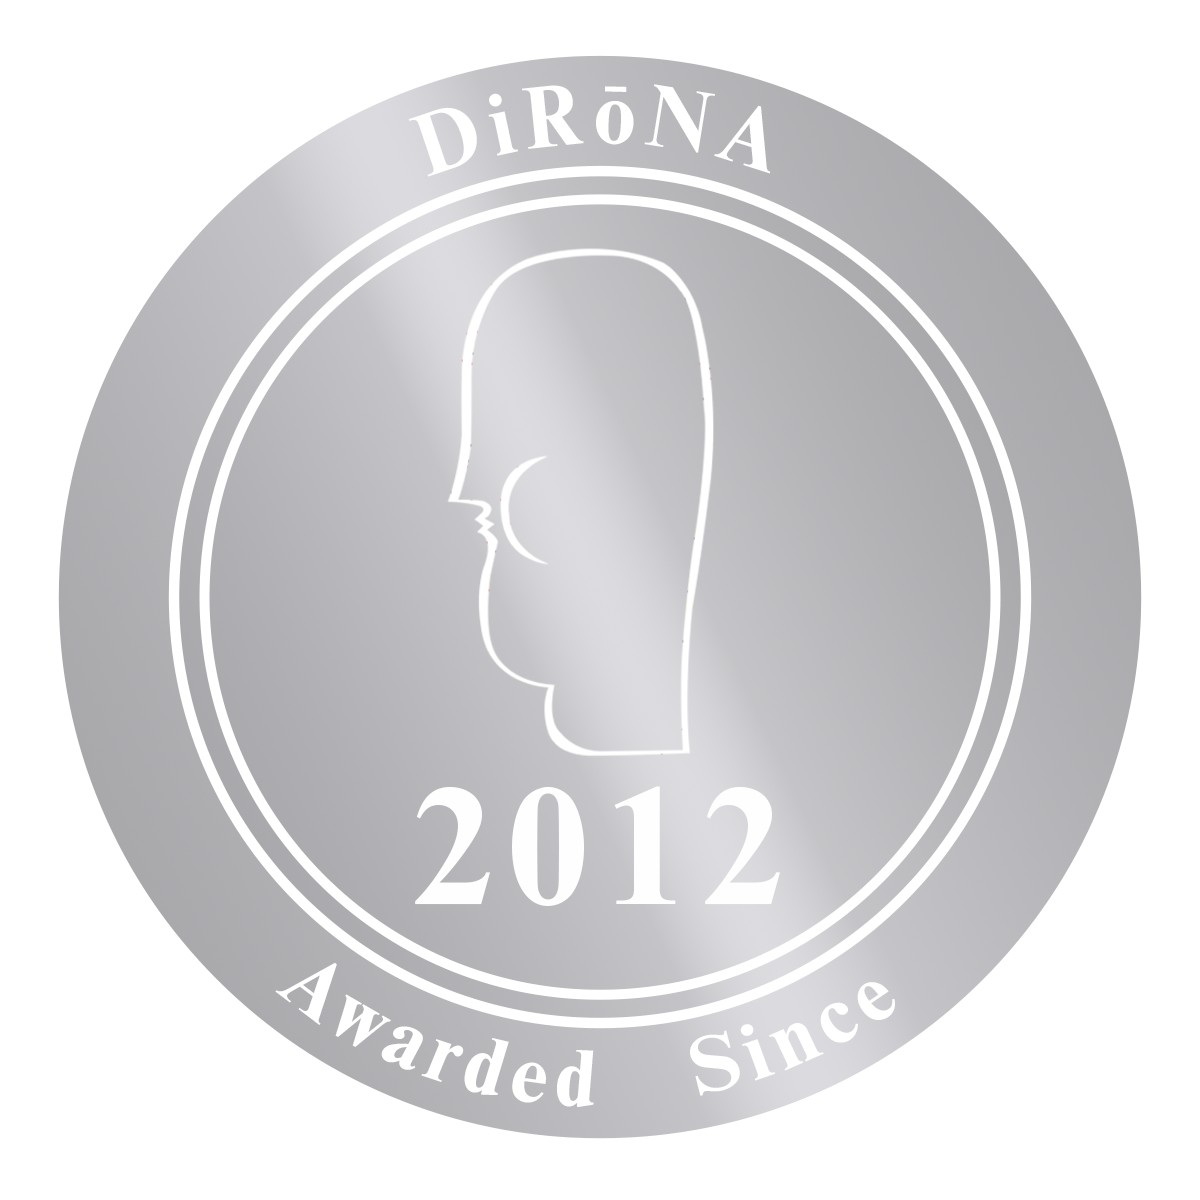 DiRoNA Awarded Restaurant Distinguished Restaurants of North America Mesa Street Grill Awarded Since 2012 Badge